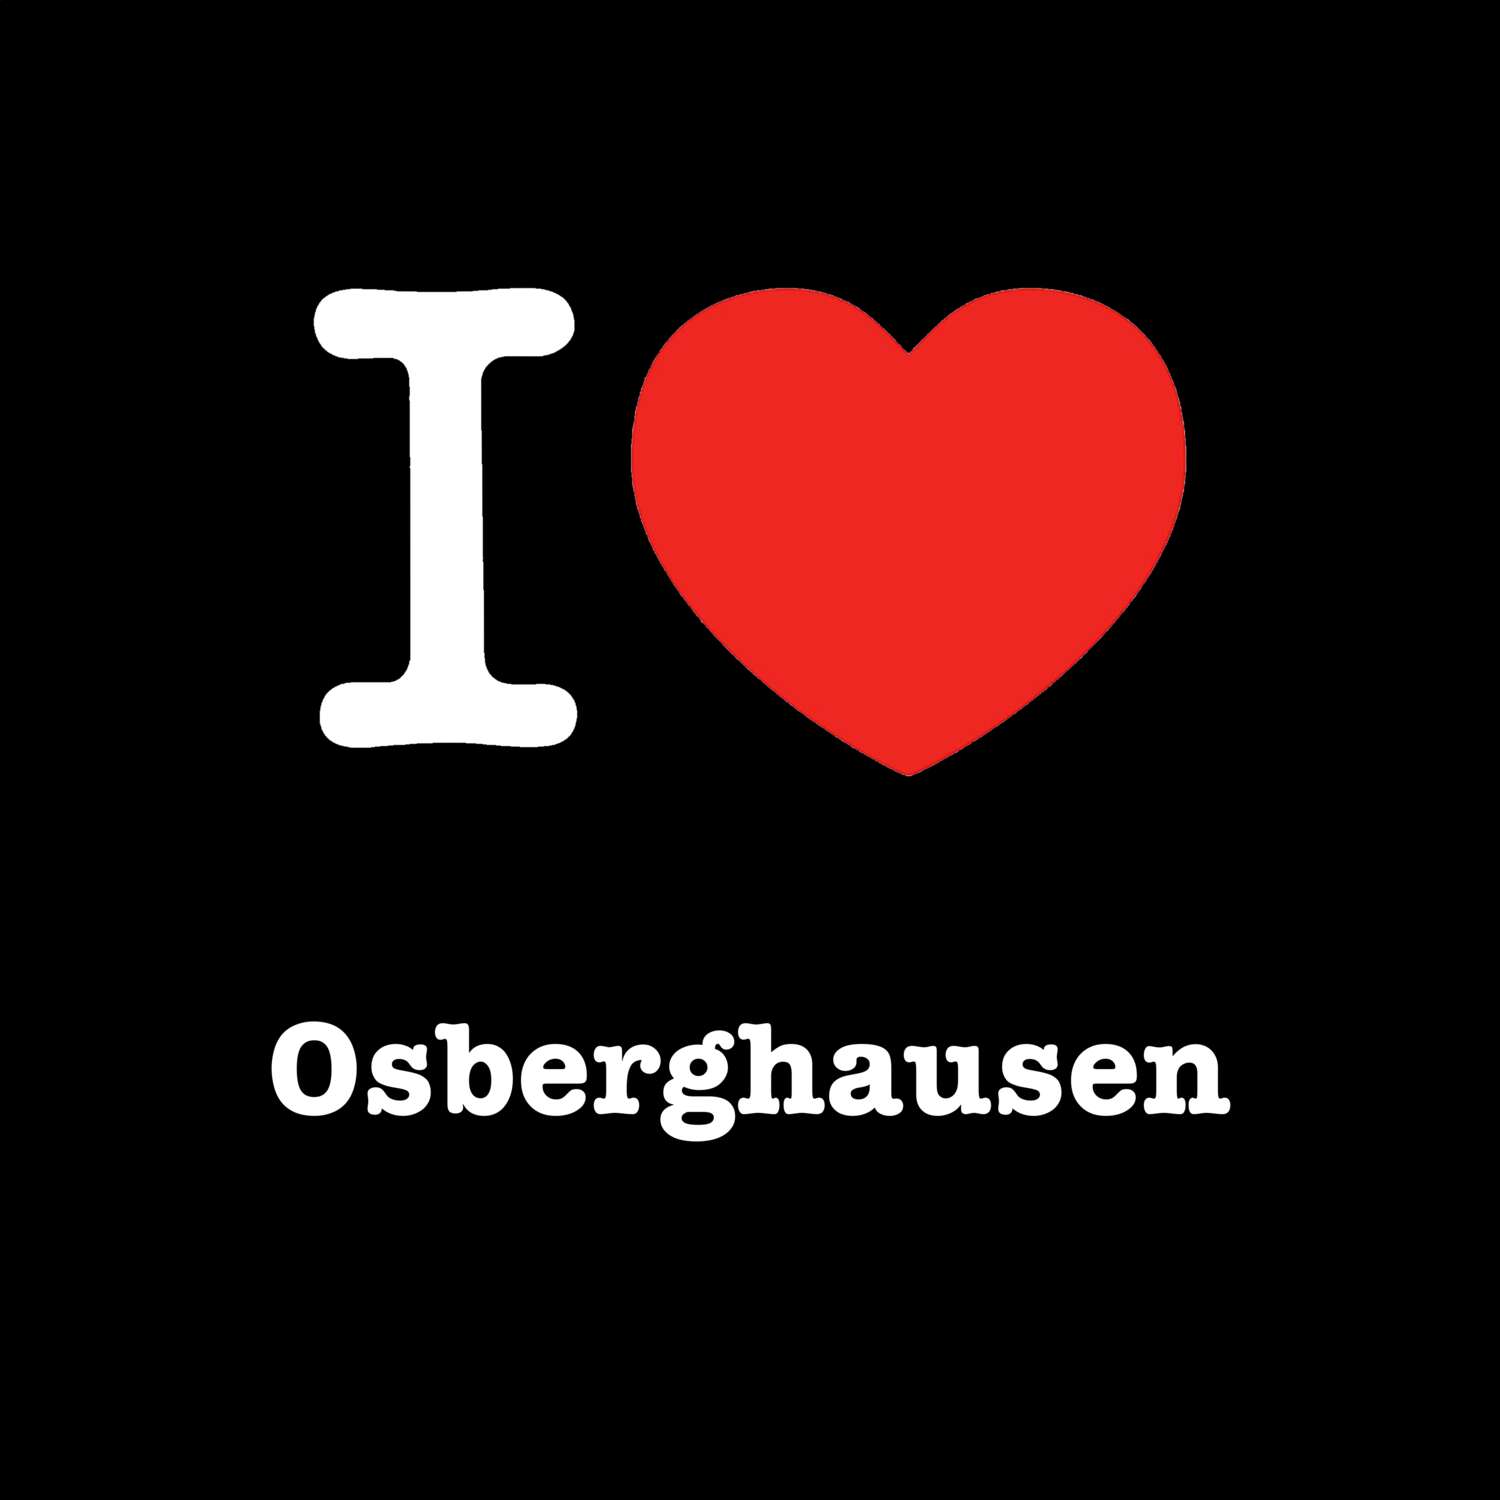 Osberghausen T-Shirt »I love«